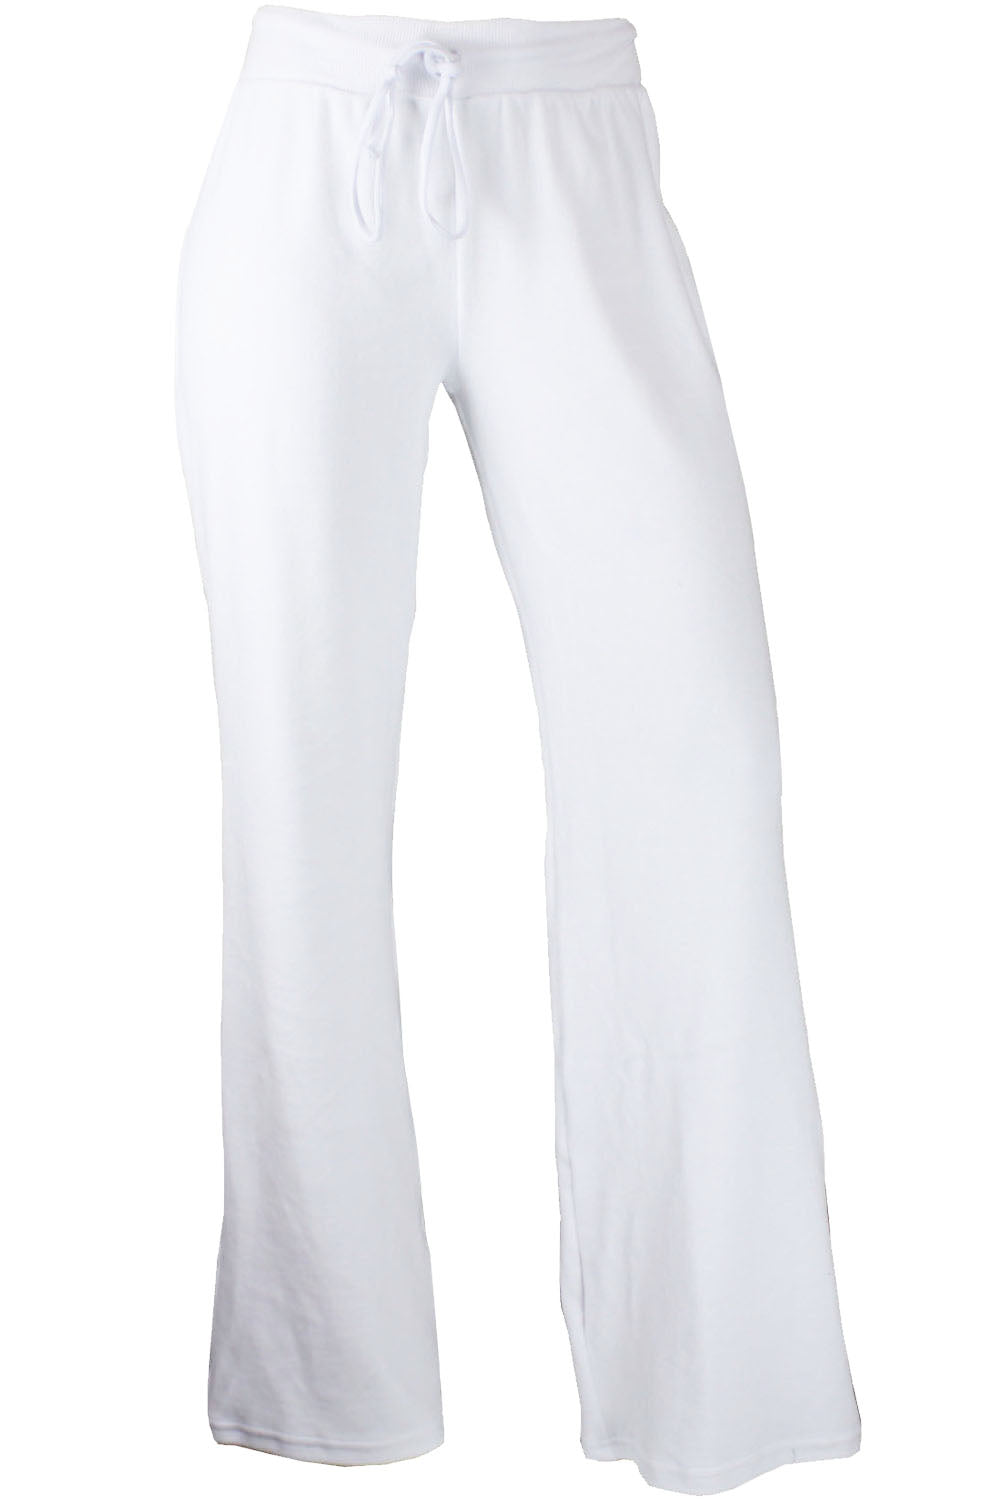 Womens White velour Pants, Sweatpants